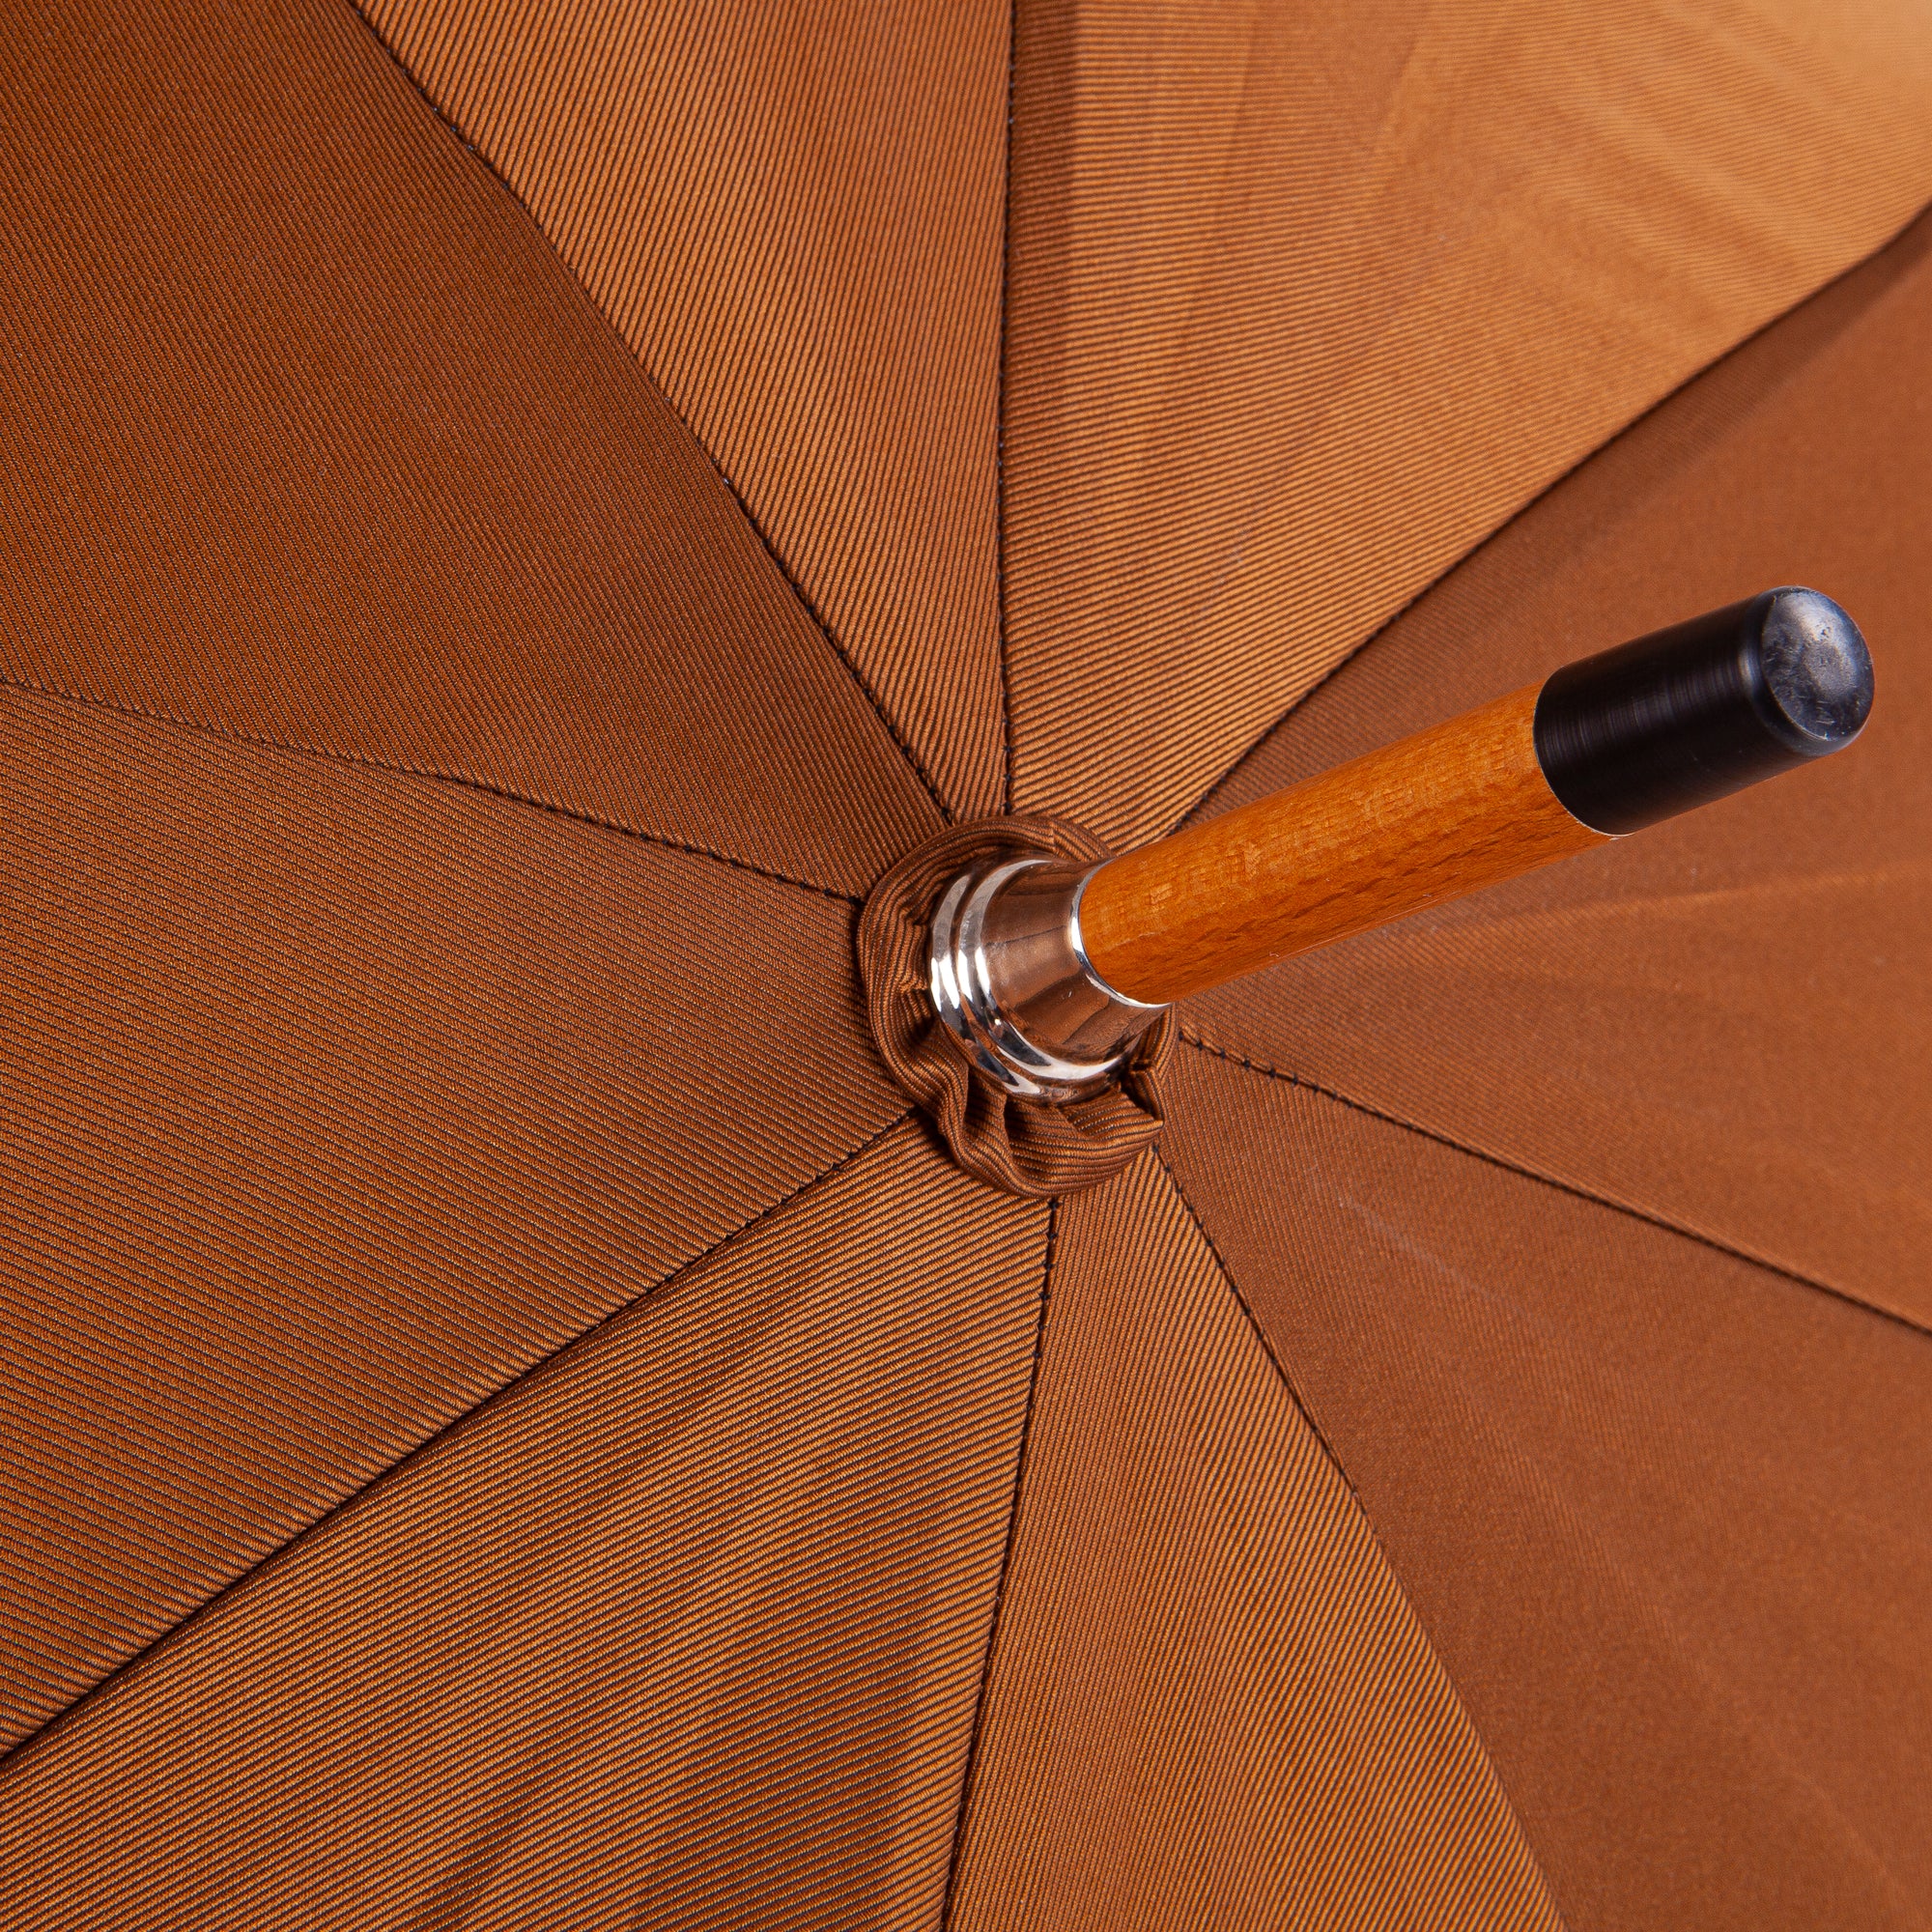 Umbrella with Malacca Handle